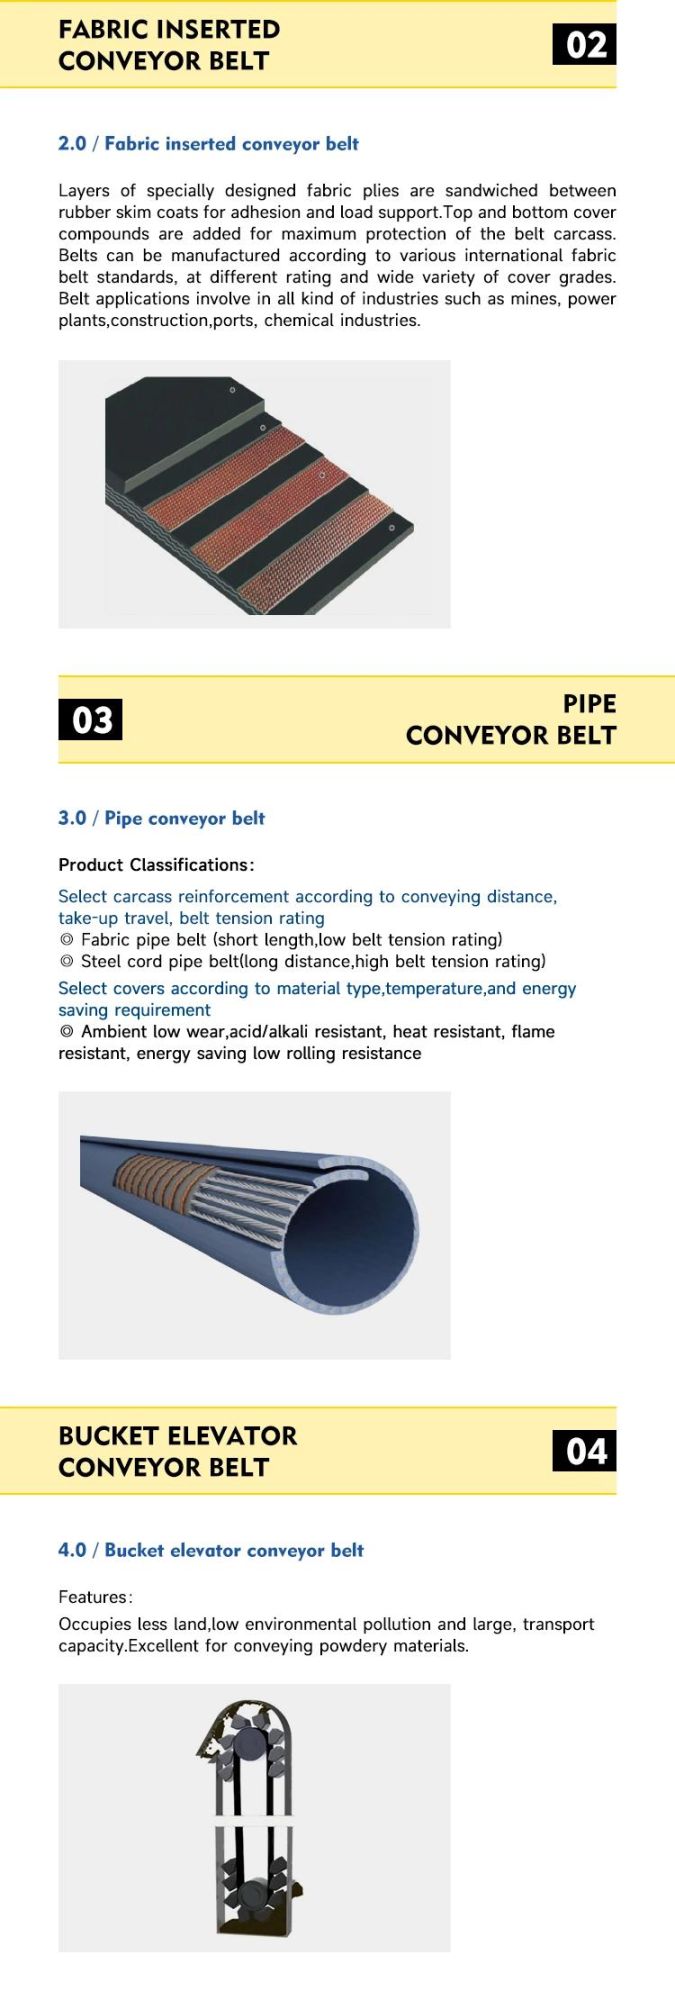 High Wear Resistant Conveyor Belt Supplier for Coal Industry